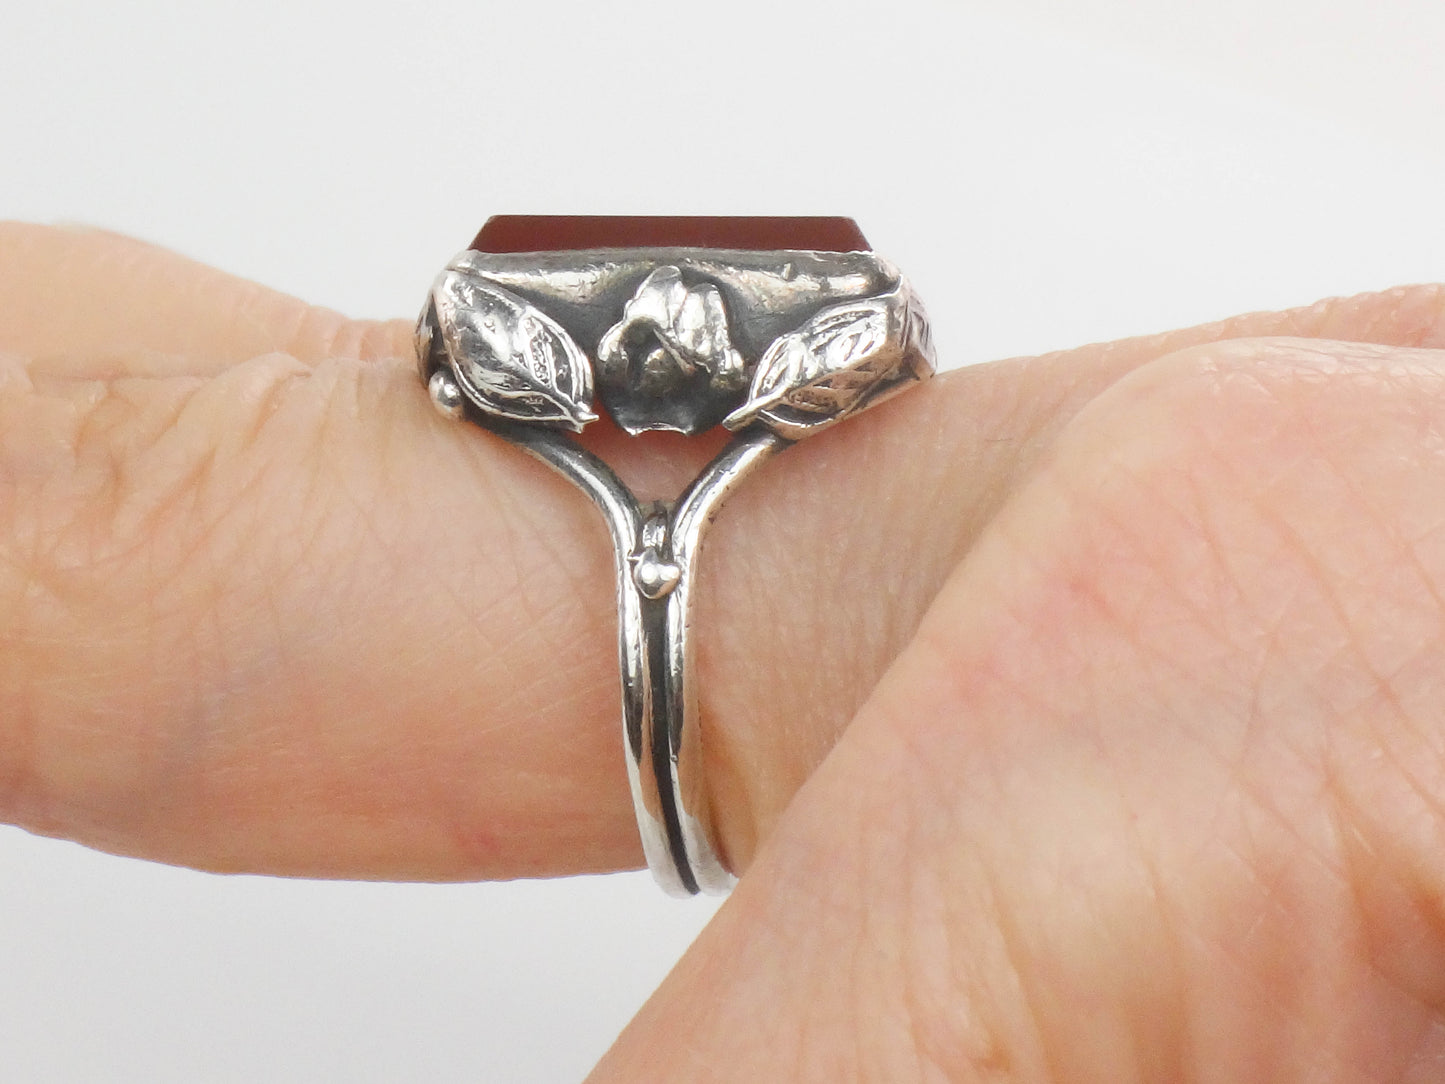 Vintage Antique Sterling Silver Carnelian Intaglio Ring, Ladies Size 5.75